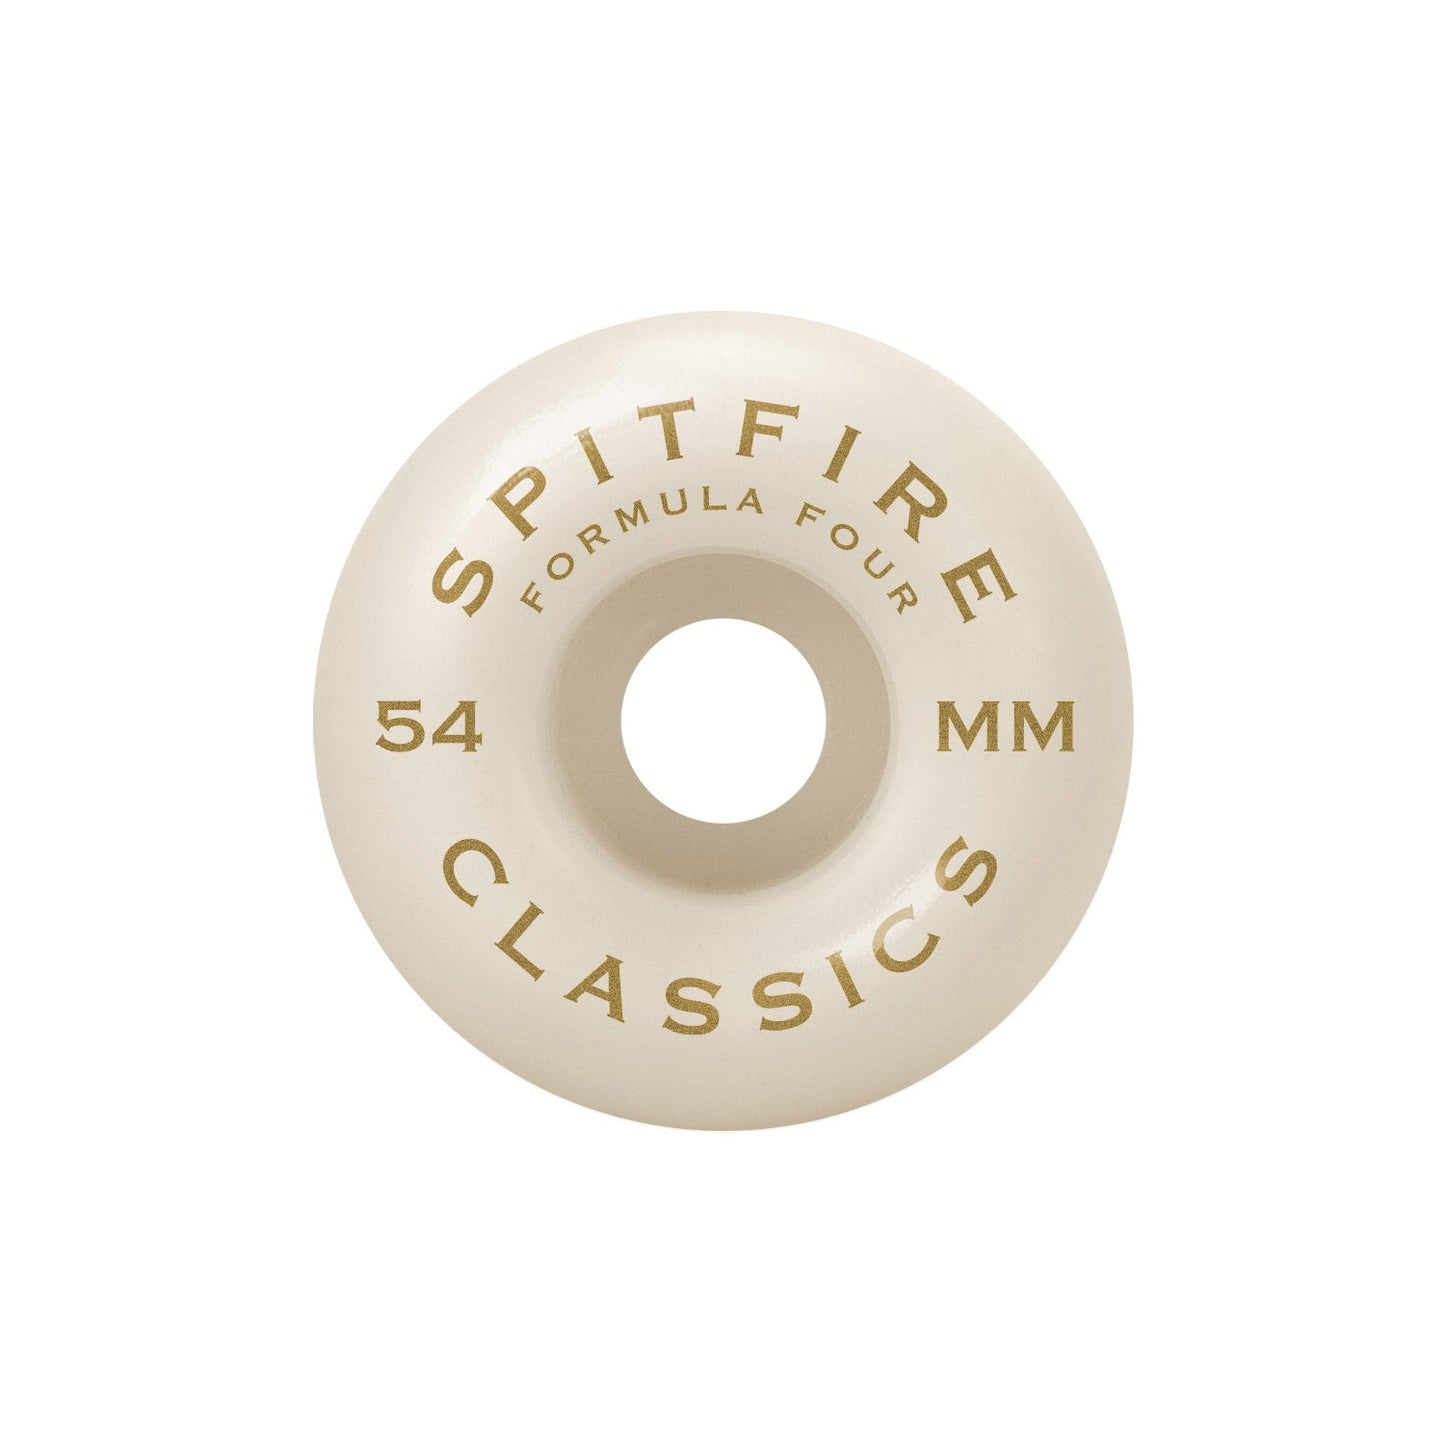 Spitfire Formula Four Classics wheel (101A, 54mm) - Tiki Room Skateboards - 2